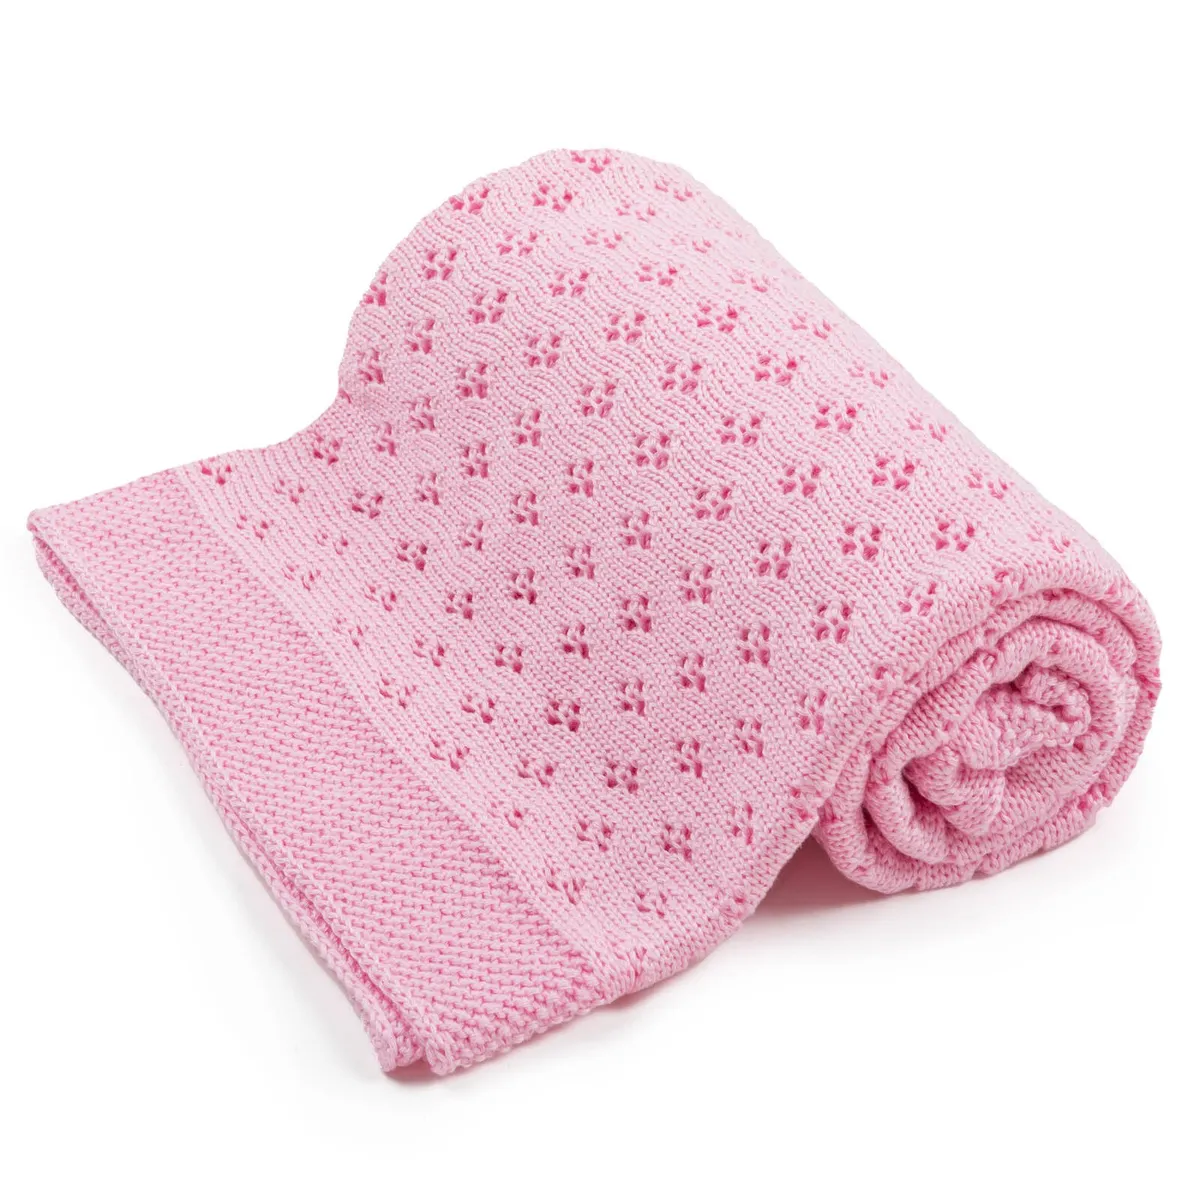 bamboo blanket openwork 100×80 cm rosa – pink 100% bamboo yarn